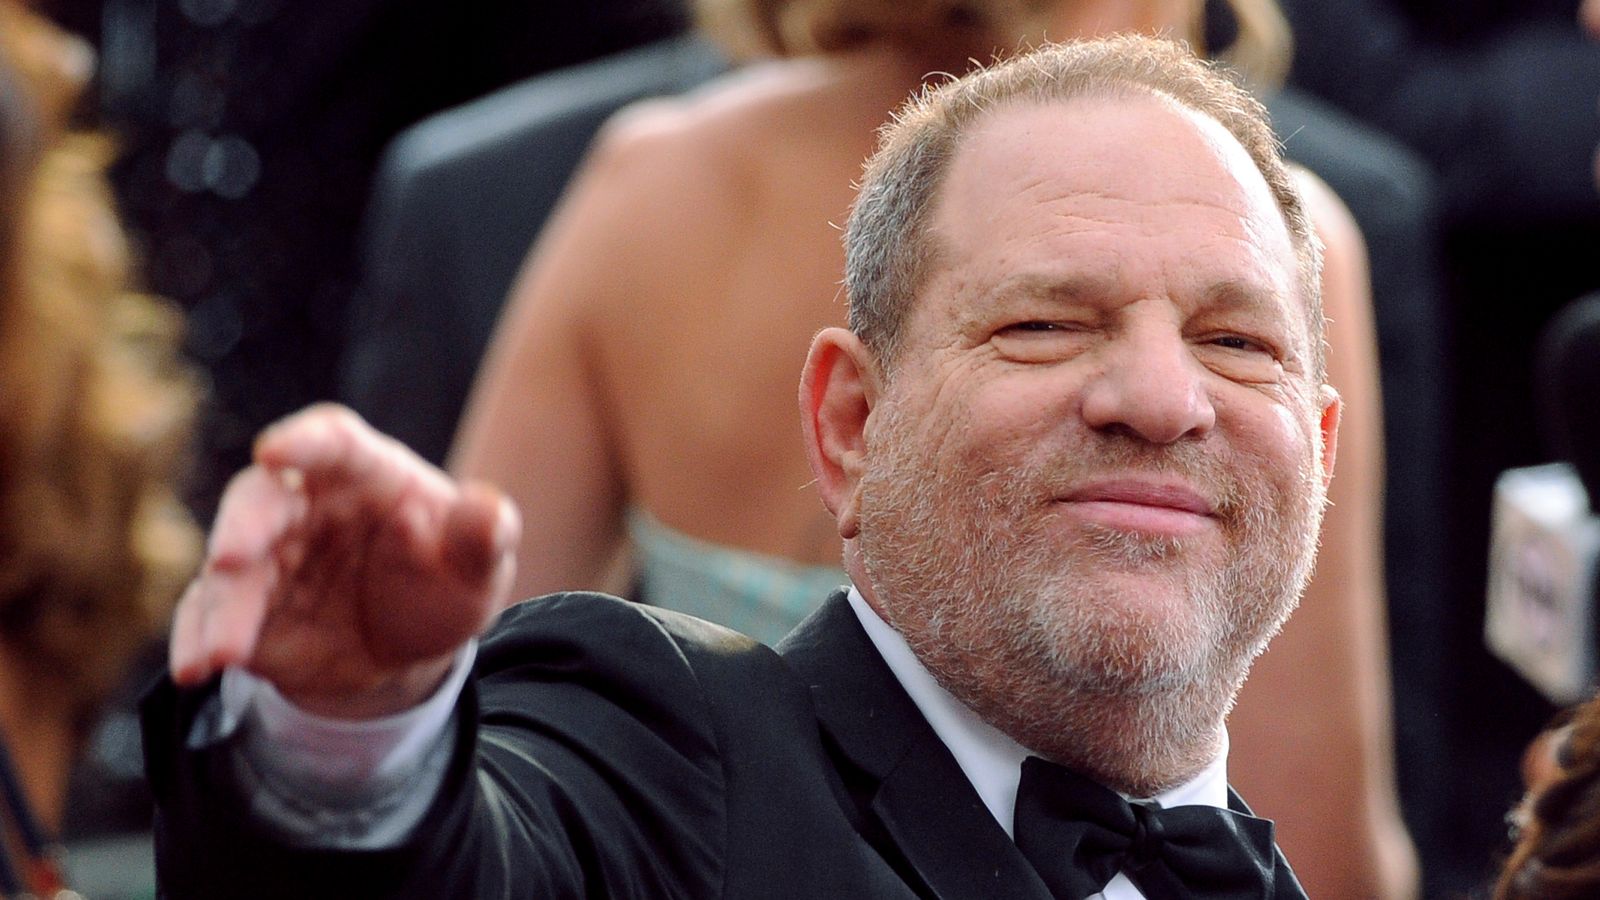 Harvey Weinstein trial: Woman tells court alleged rape left her 'feeling very guilty'